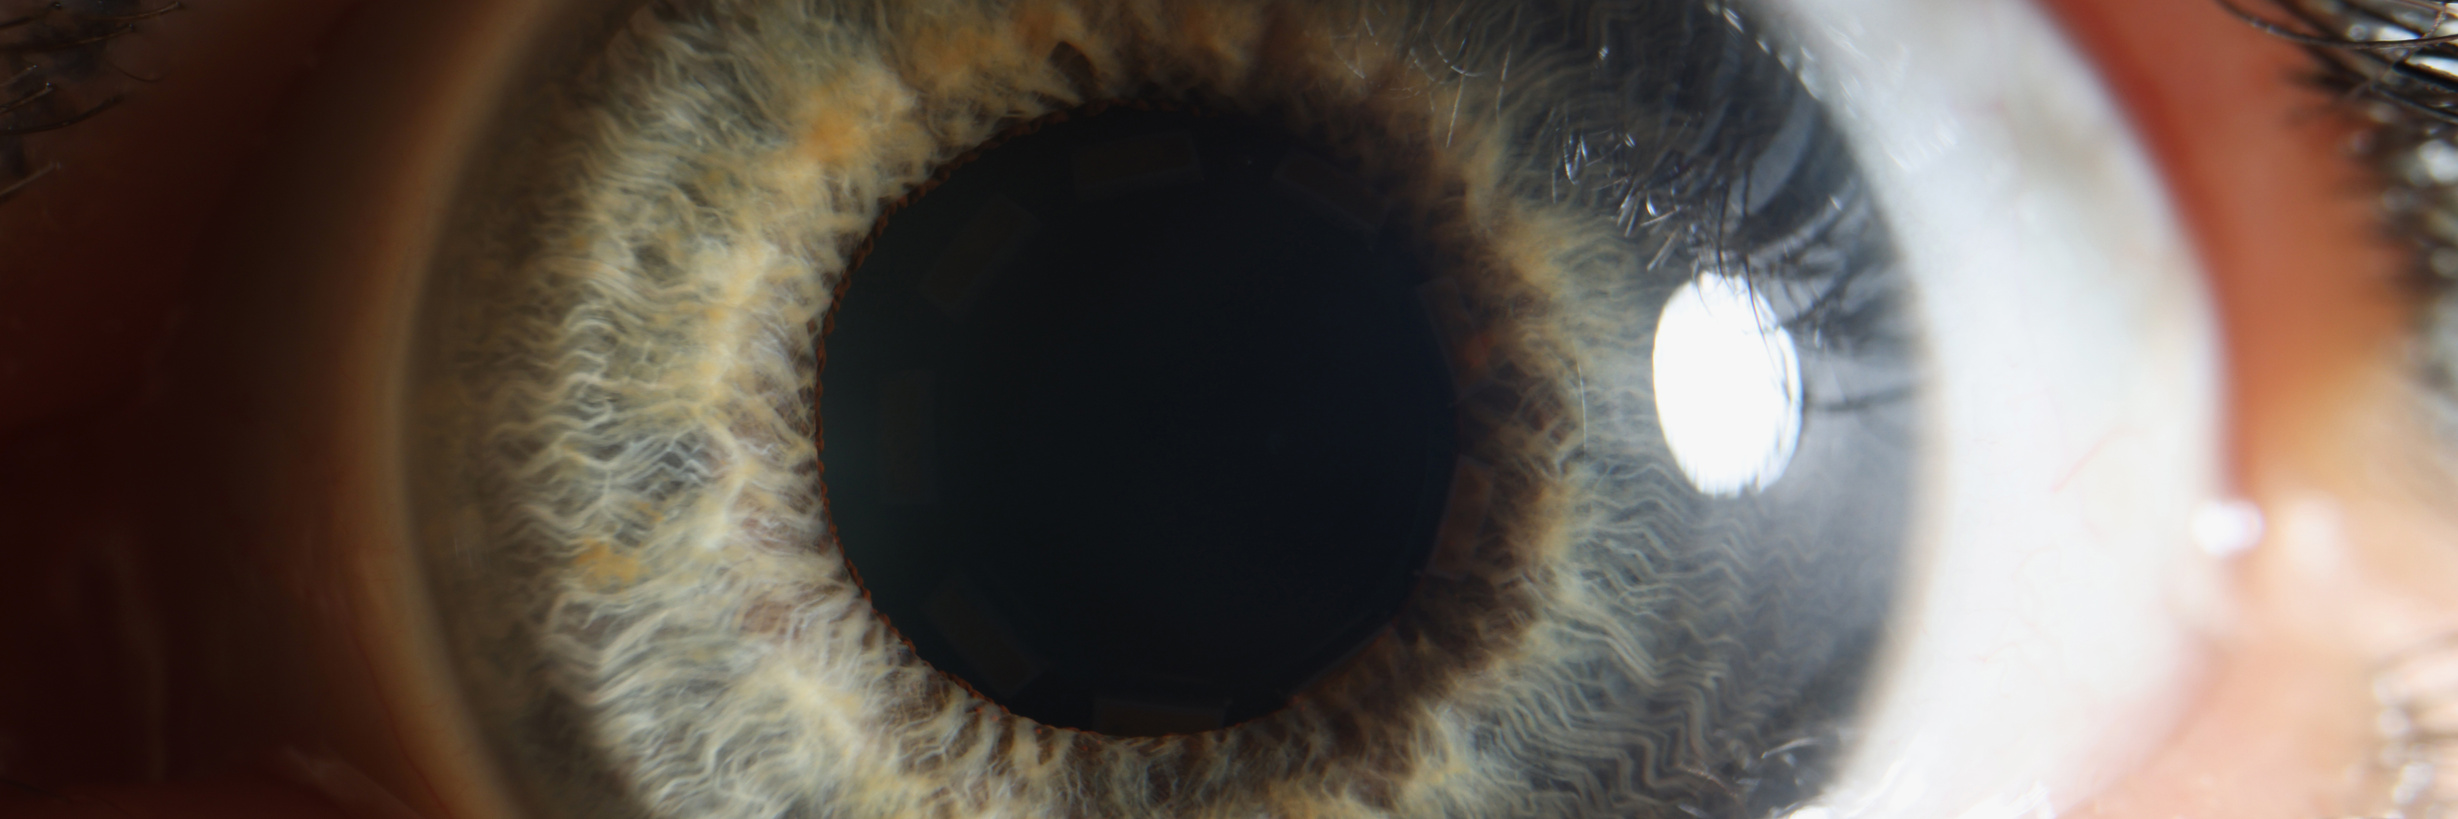 Macro Human Eye, Dilated Pupil of Gray Color, Close-up Retina